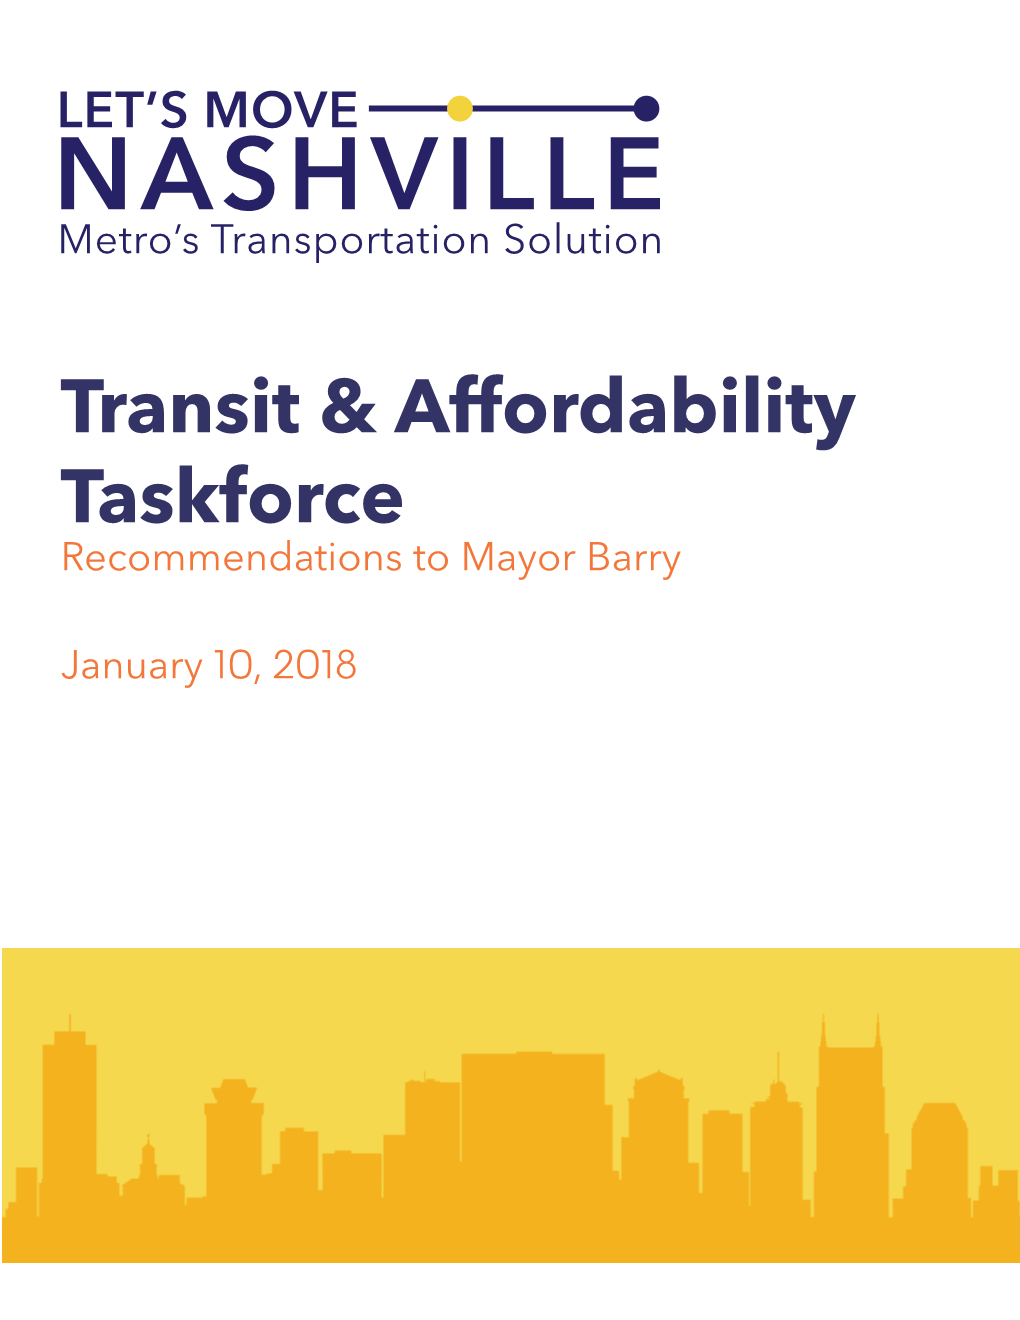 Transit & Affordability Taskforce